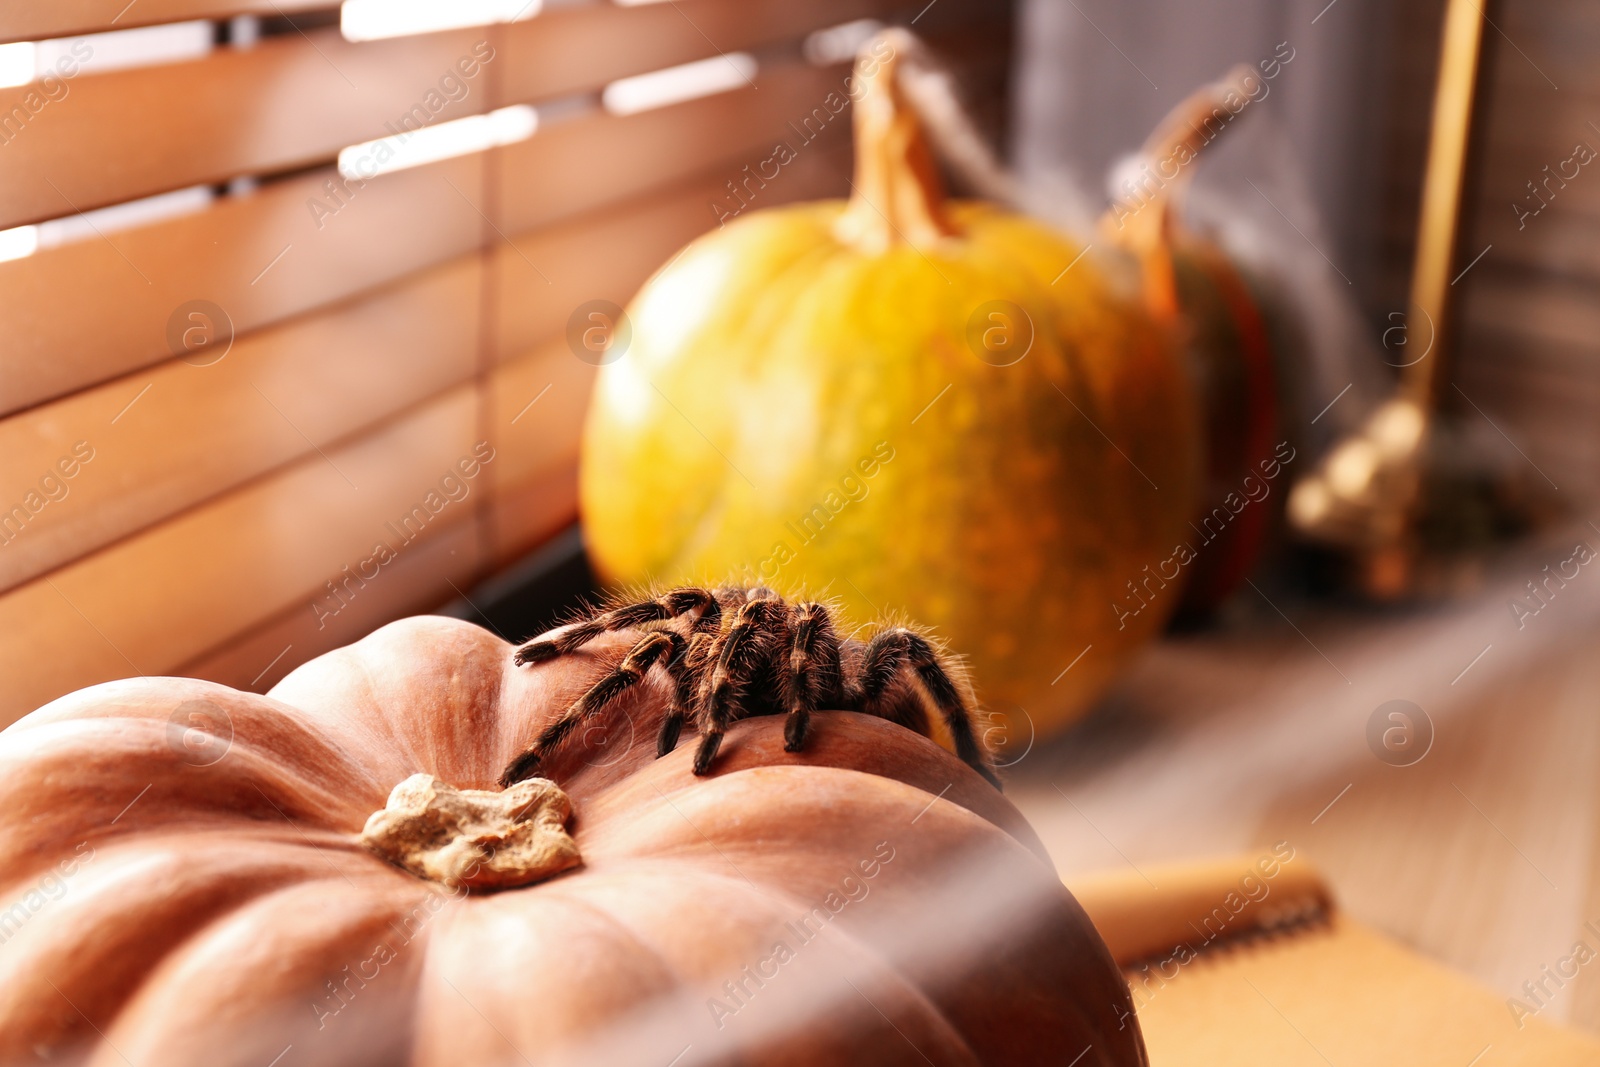 Photo of Striped knee tarantula on pumpkin near window indoors, space for text. Halloween celebration